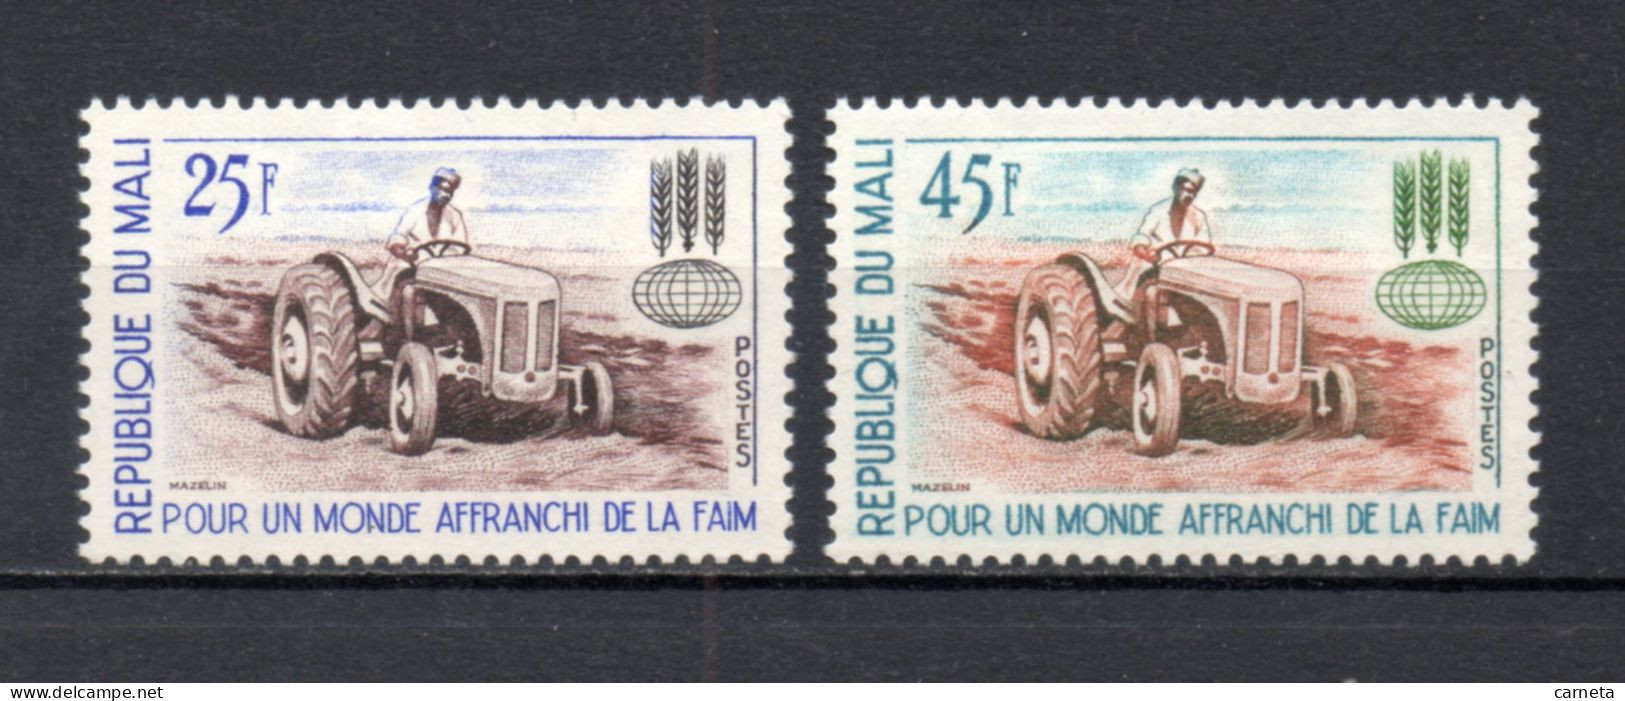 MALI  N° 45 + 46   NEUFS SANS CHARNIERE  COTE 2.50€    CAMPAGNE CONTRE LA FAIM - Mali (1959-...)